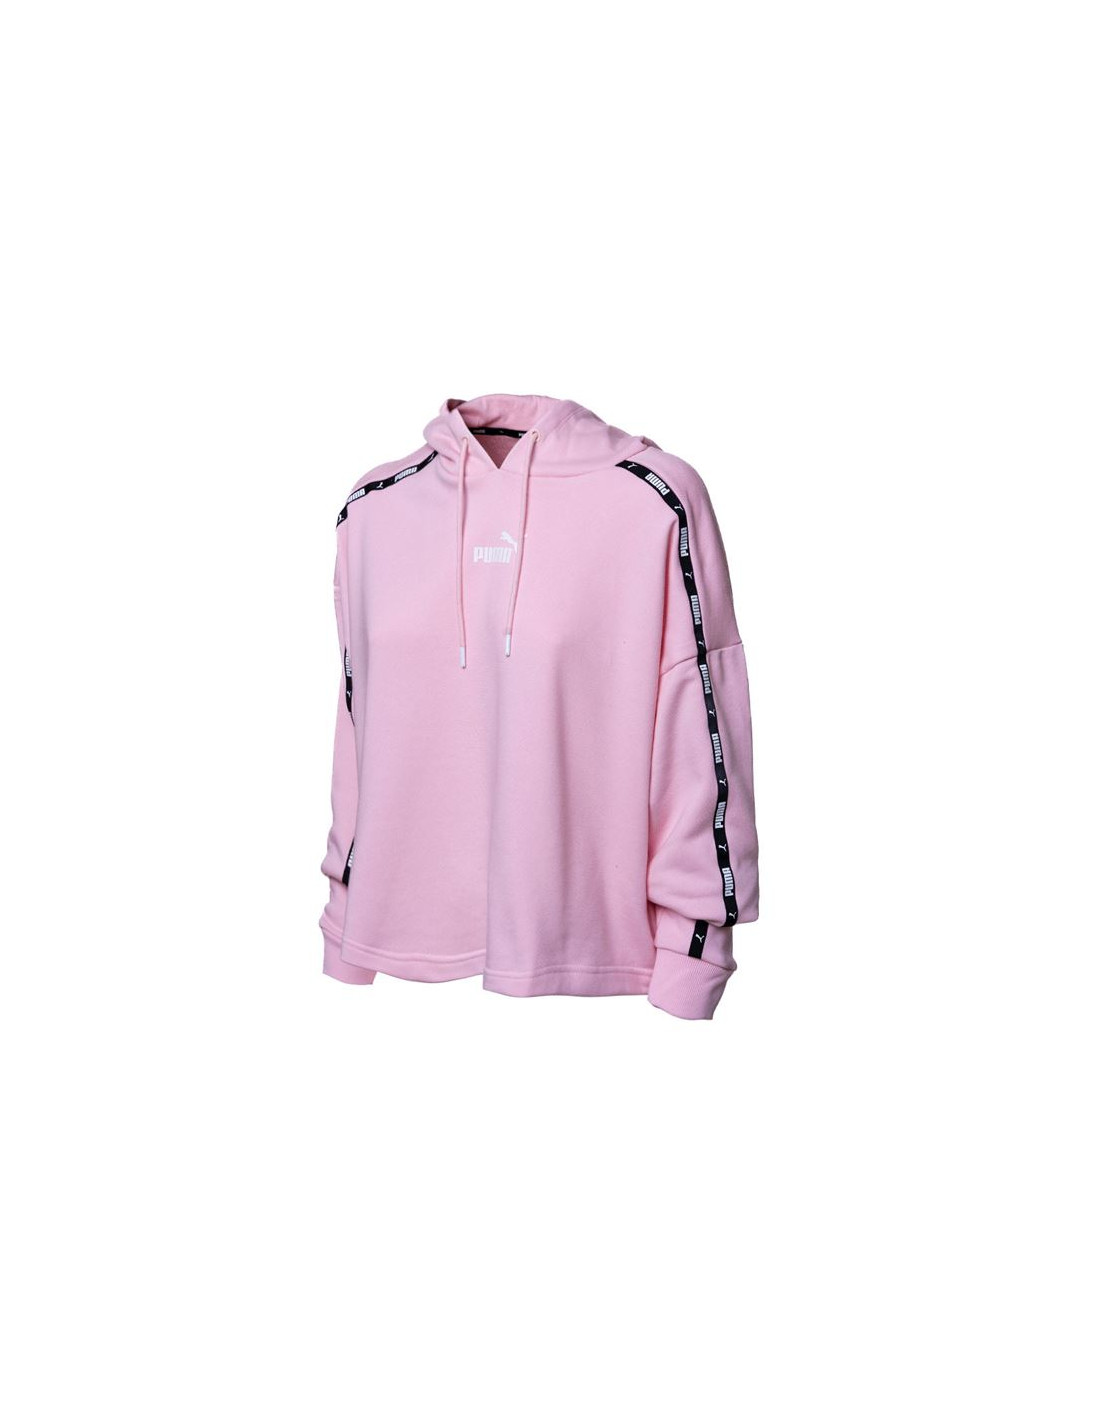 Sudadera puma power tape cropped hoodie w pink